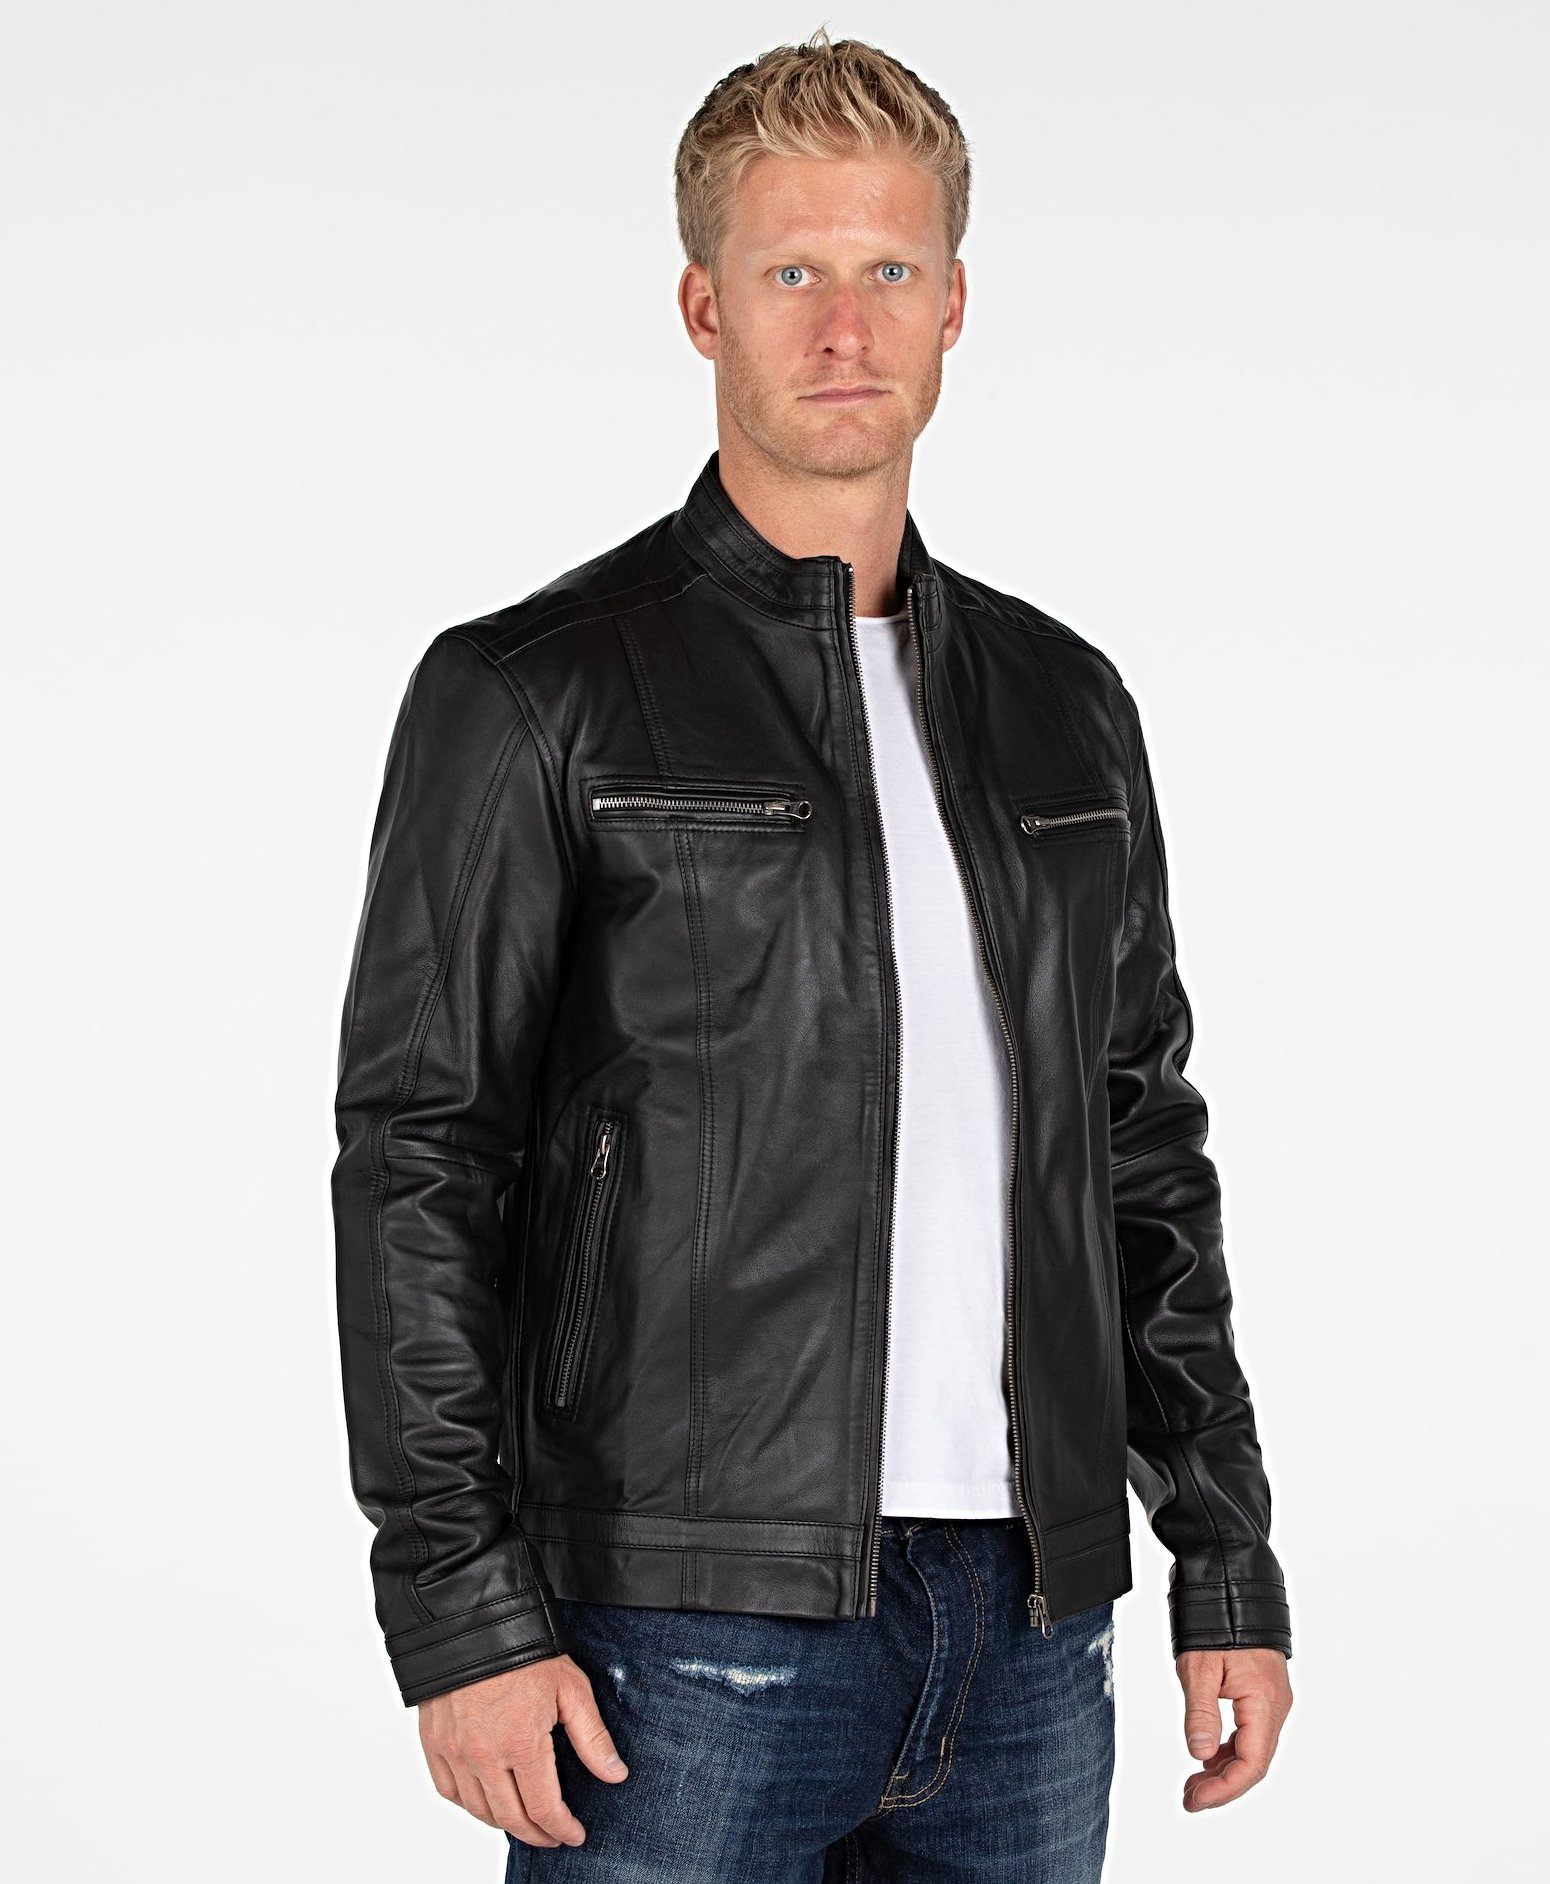 Leather Jackets for Men & Women in Australia | Leather Jacket Shop